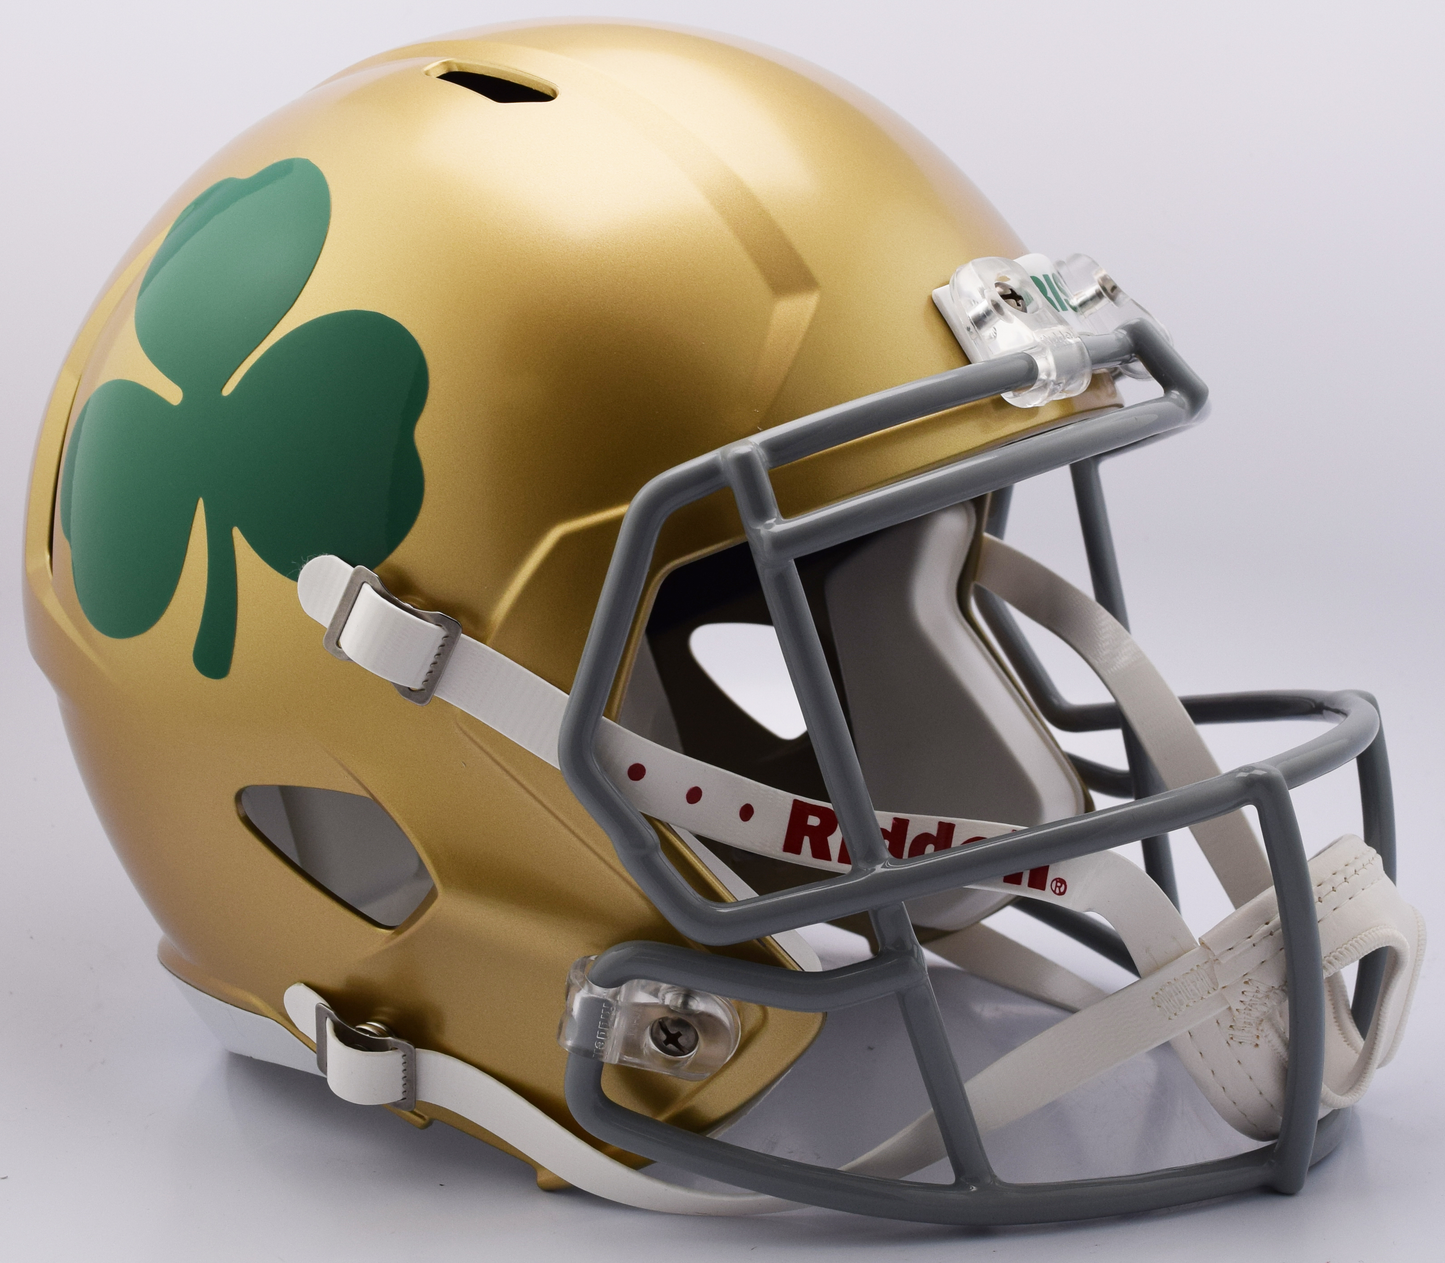 Notre Dame Fighting Irish full size replica helmet